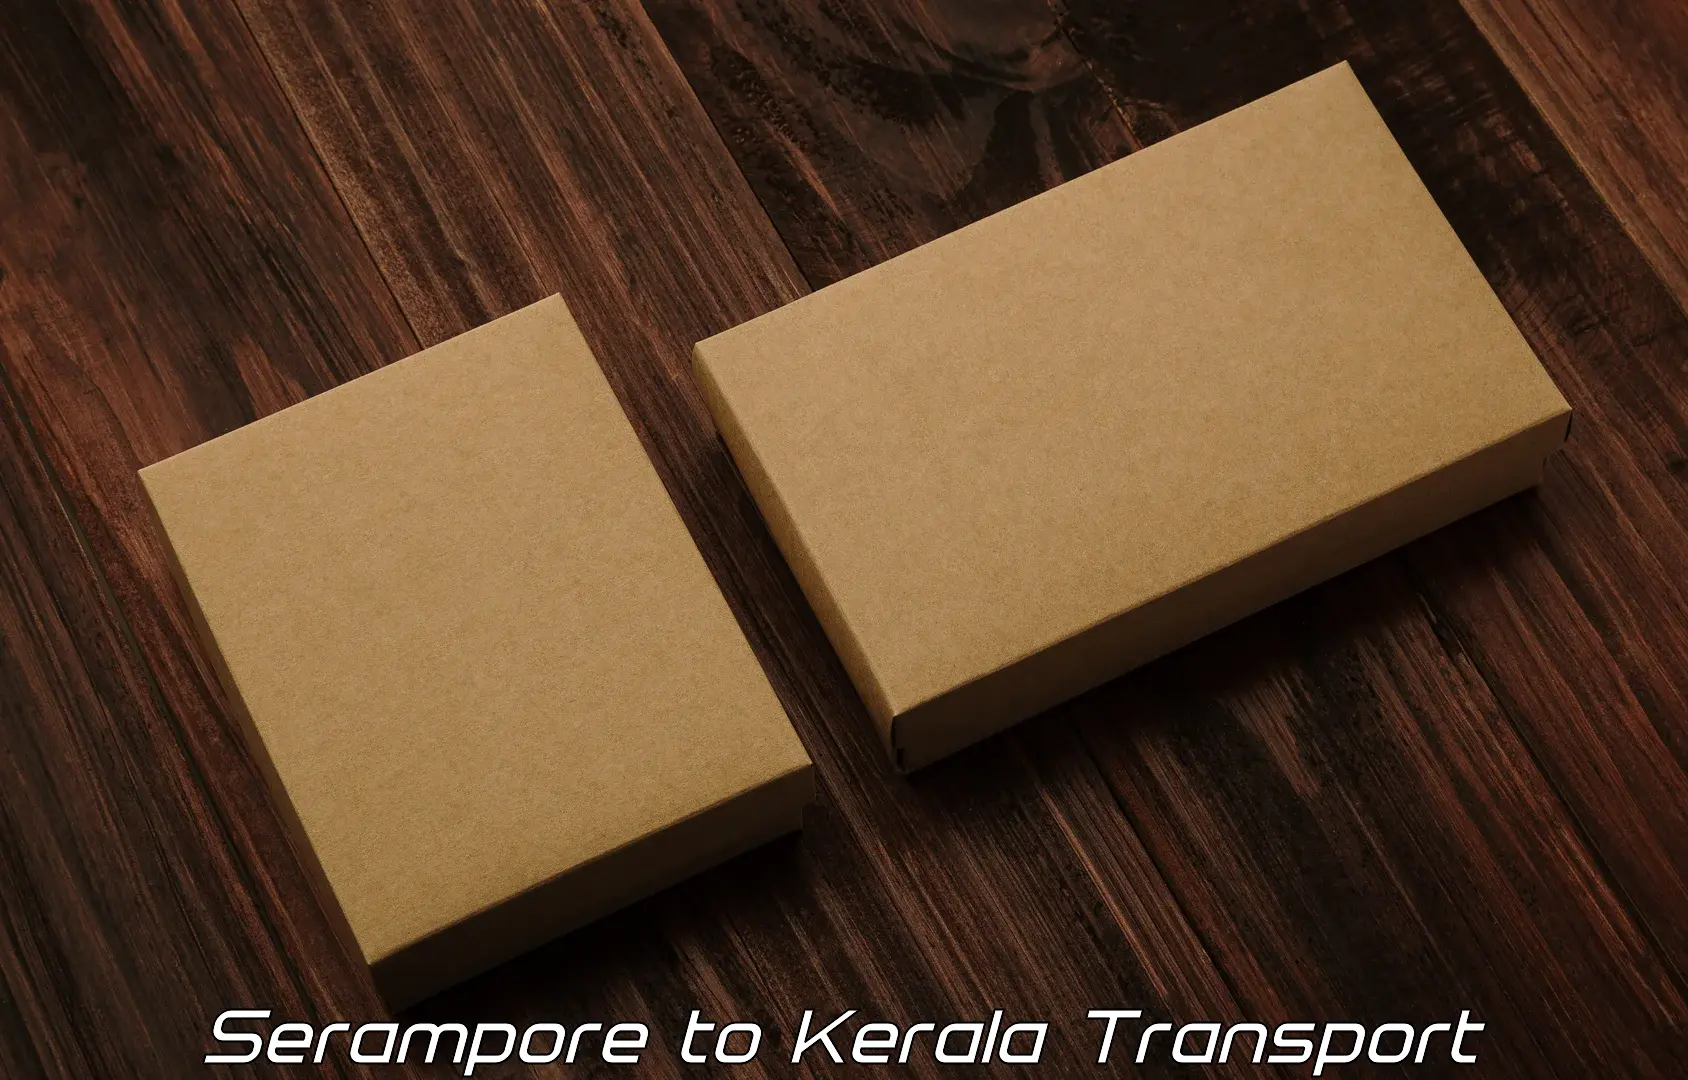 Transport in sharing Serampore to Ramankary